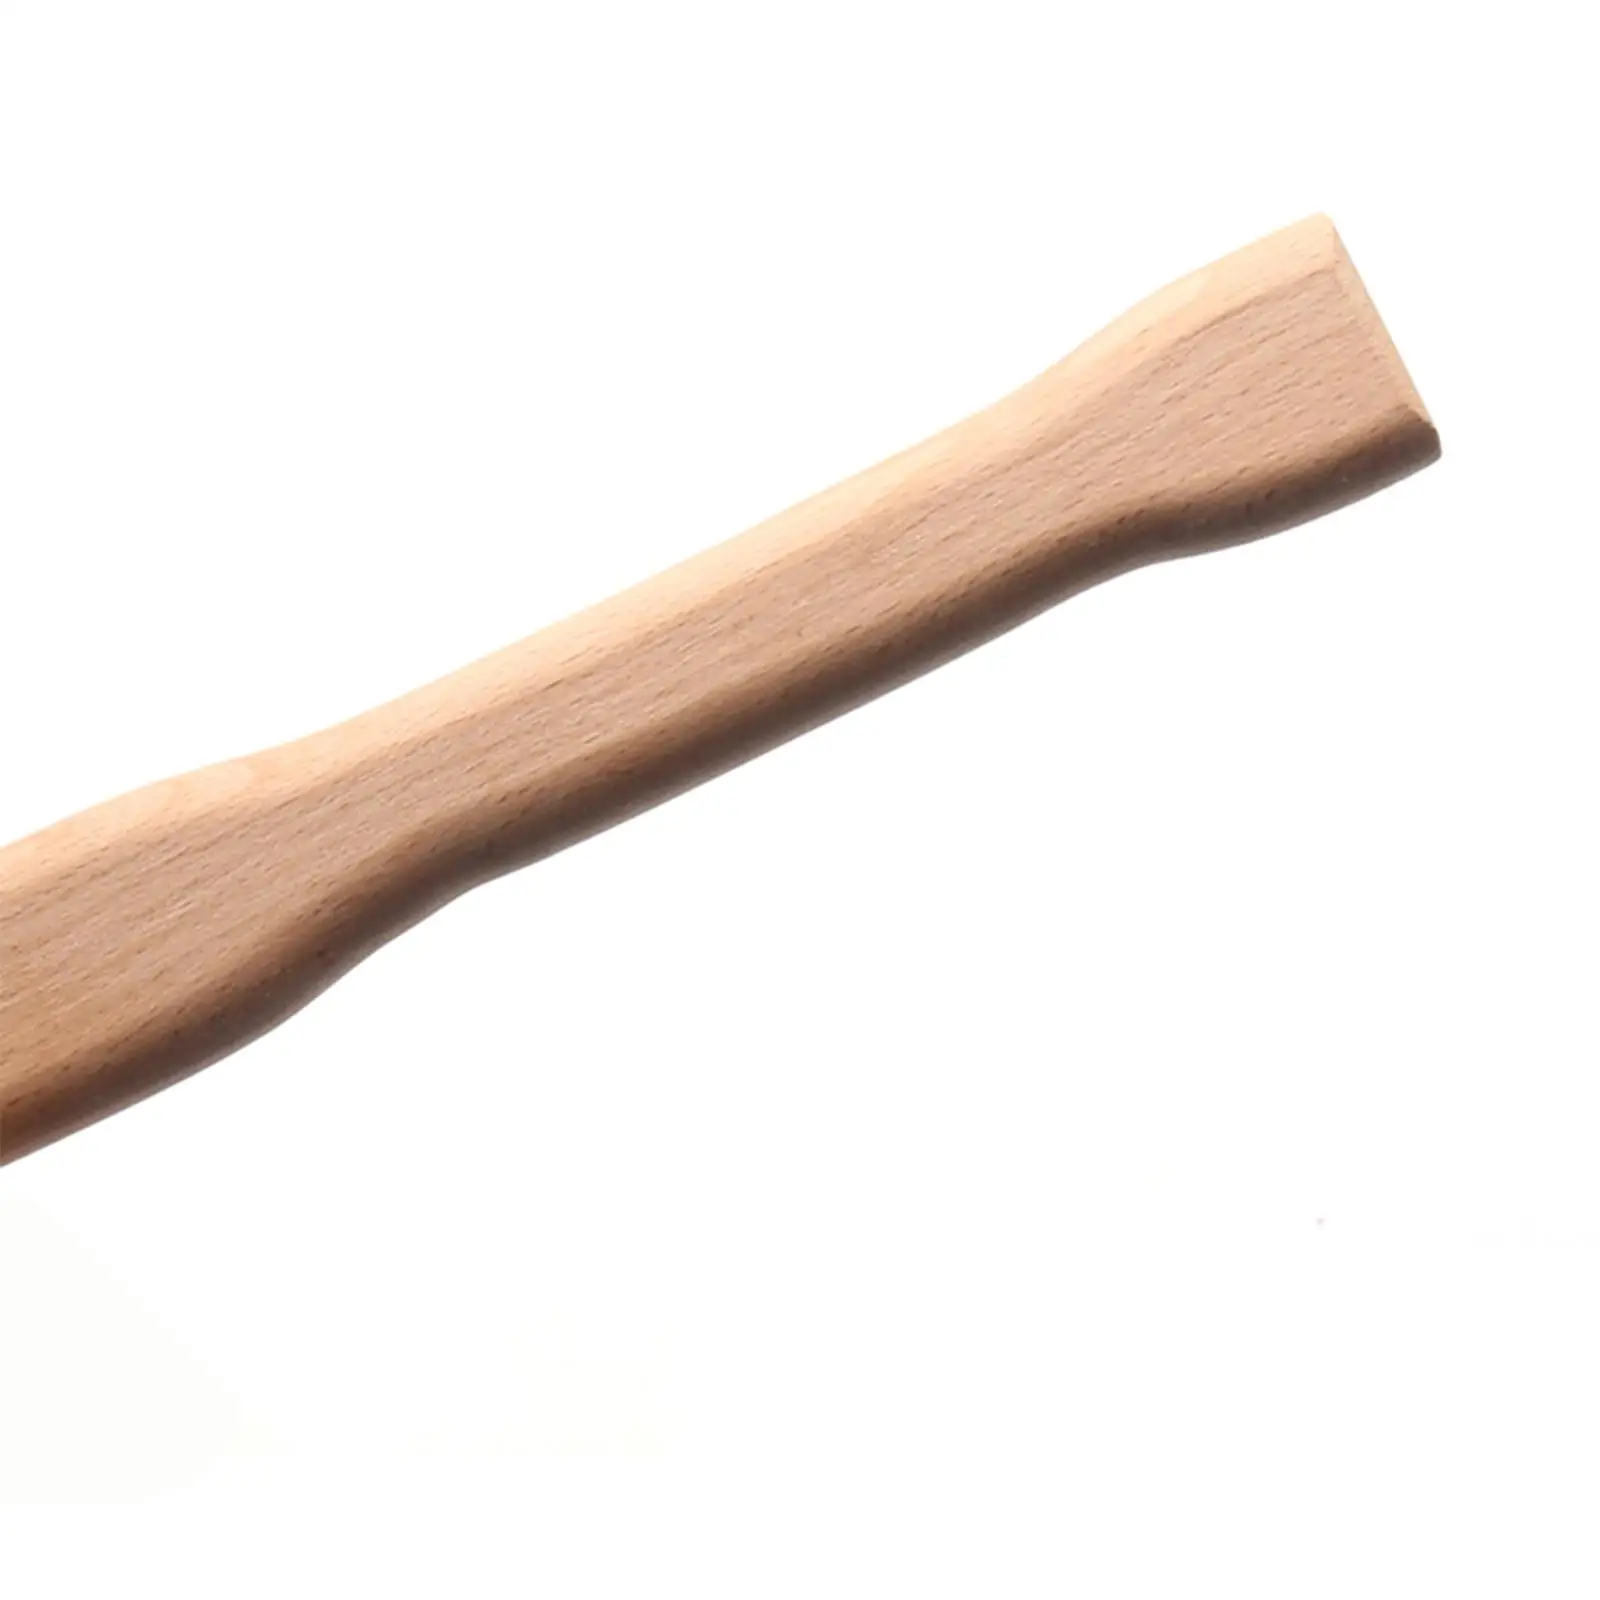 Beech Solid Wood Mallet Mallet Portable Vintage Wooden Mallet Wooden Hammer for Carpenter